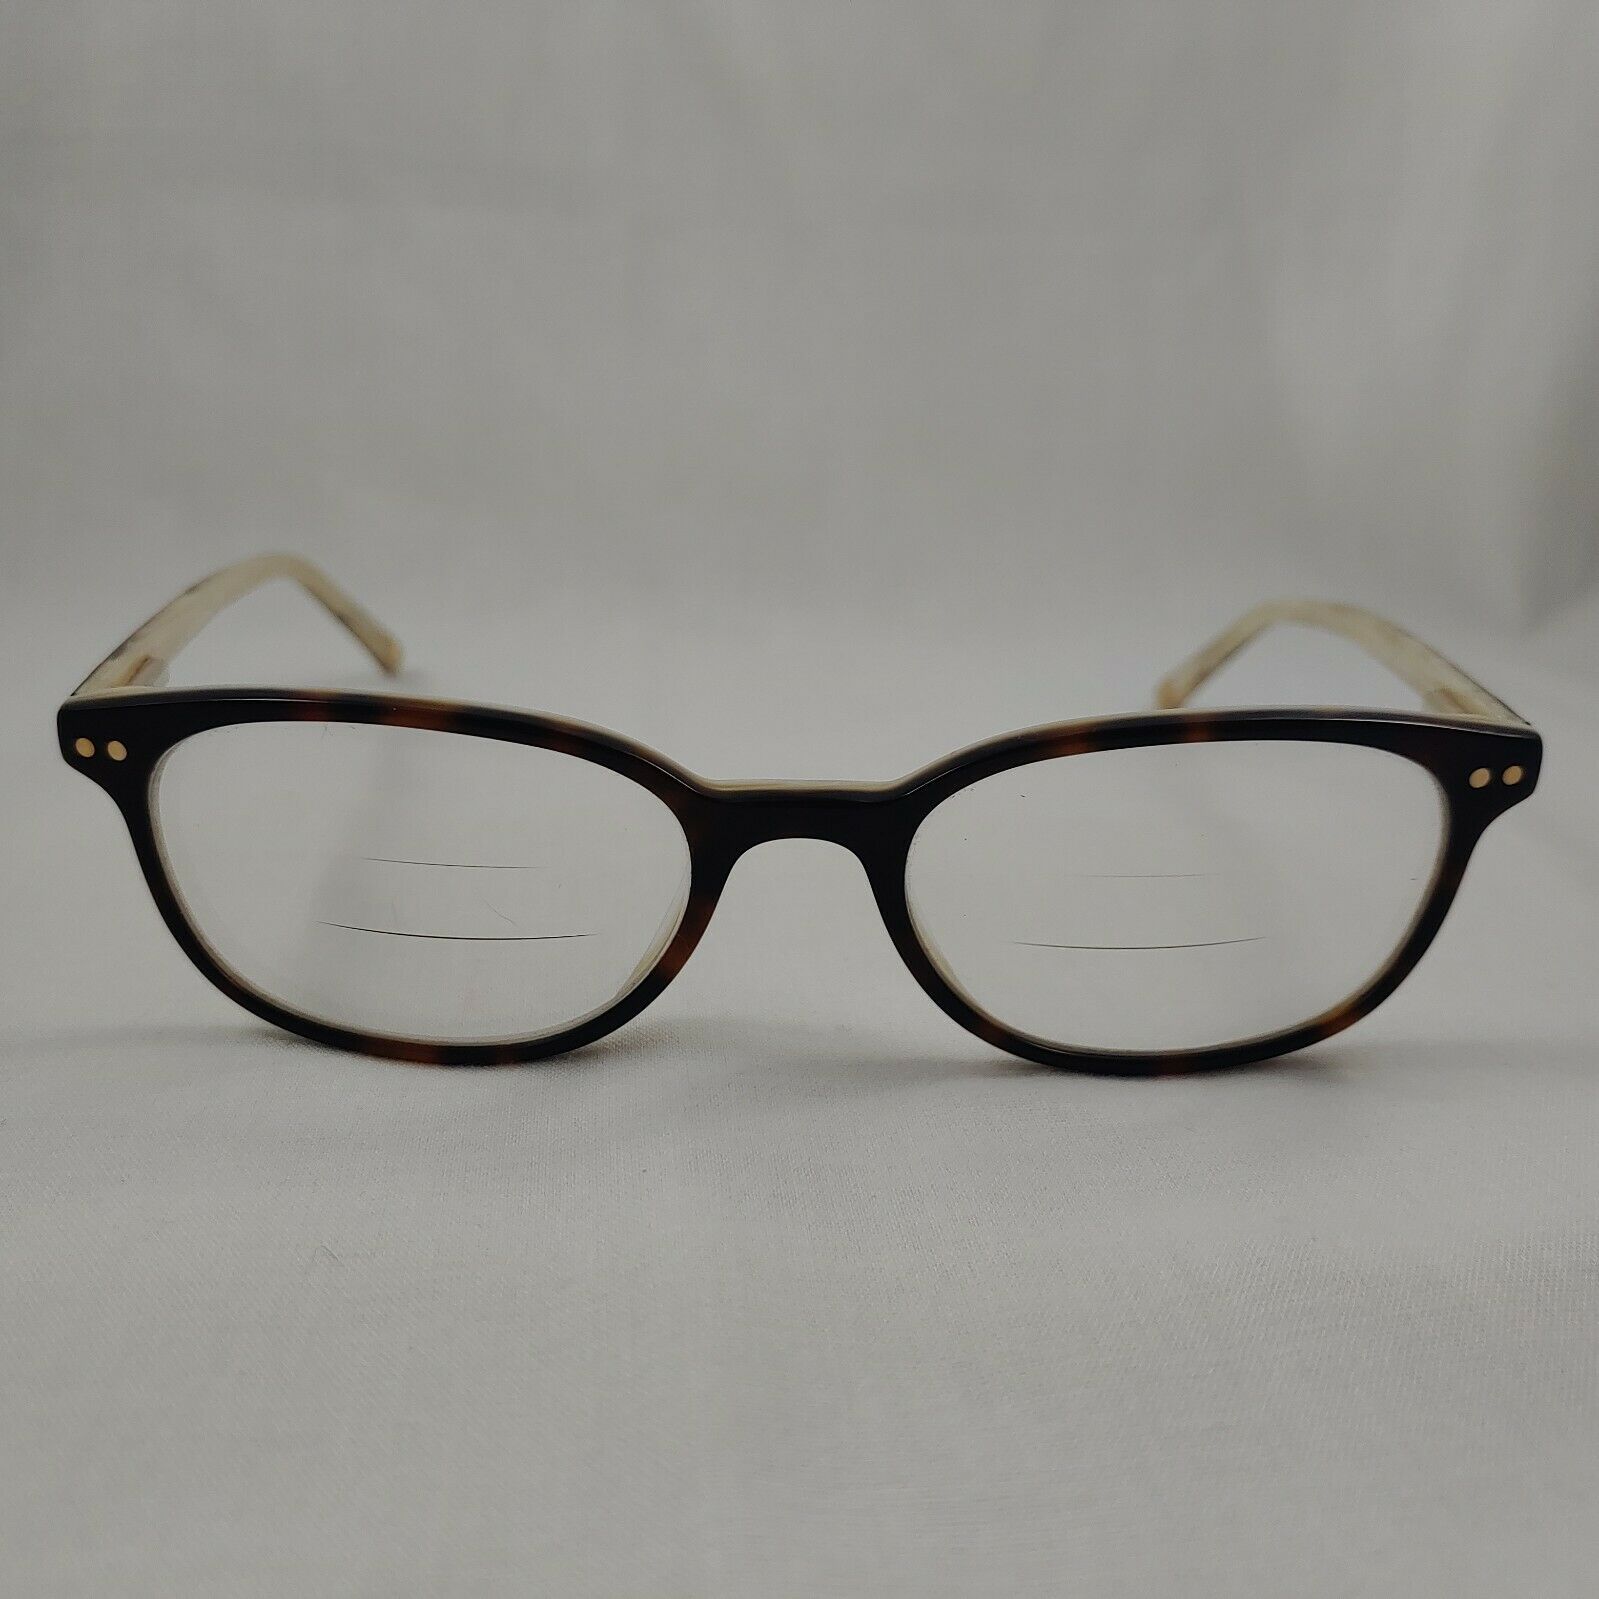 Liz Claiborne Eyeglass Frames L380 UV2 Plastic Full Rim Tortoise Shell ...